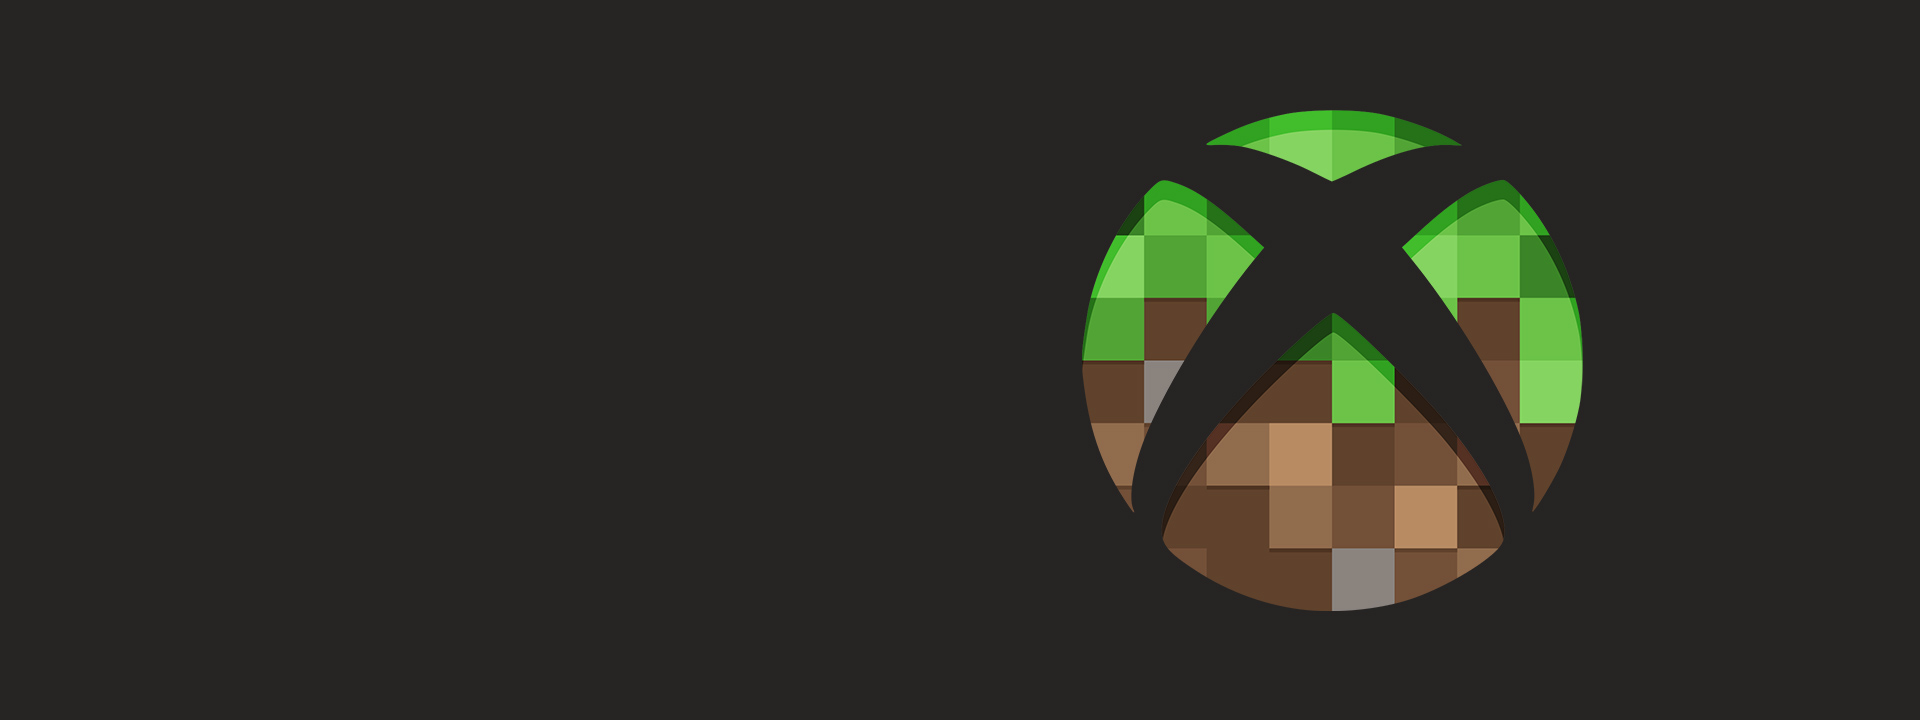 Xbox logo over a Minecraft textured background.